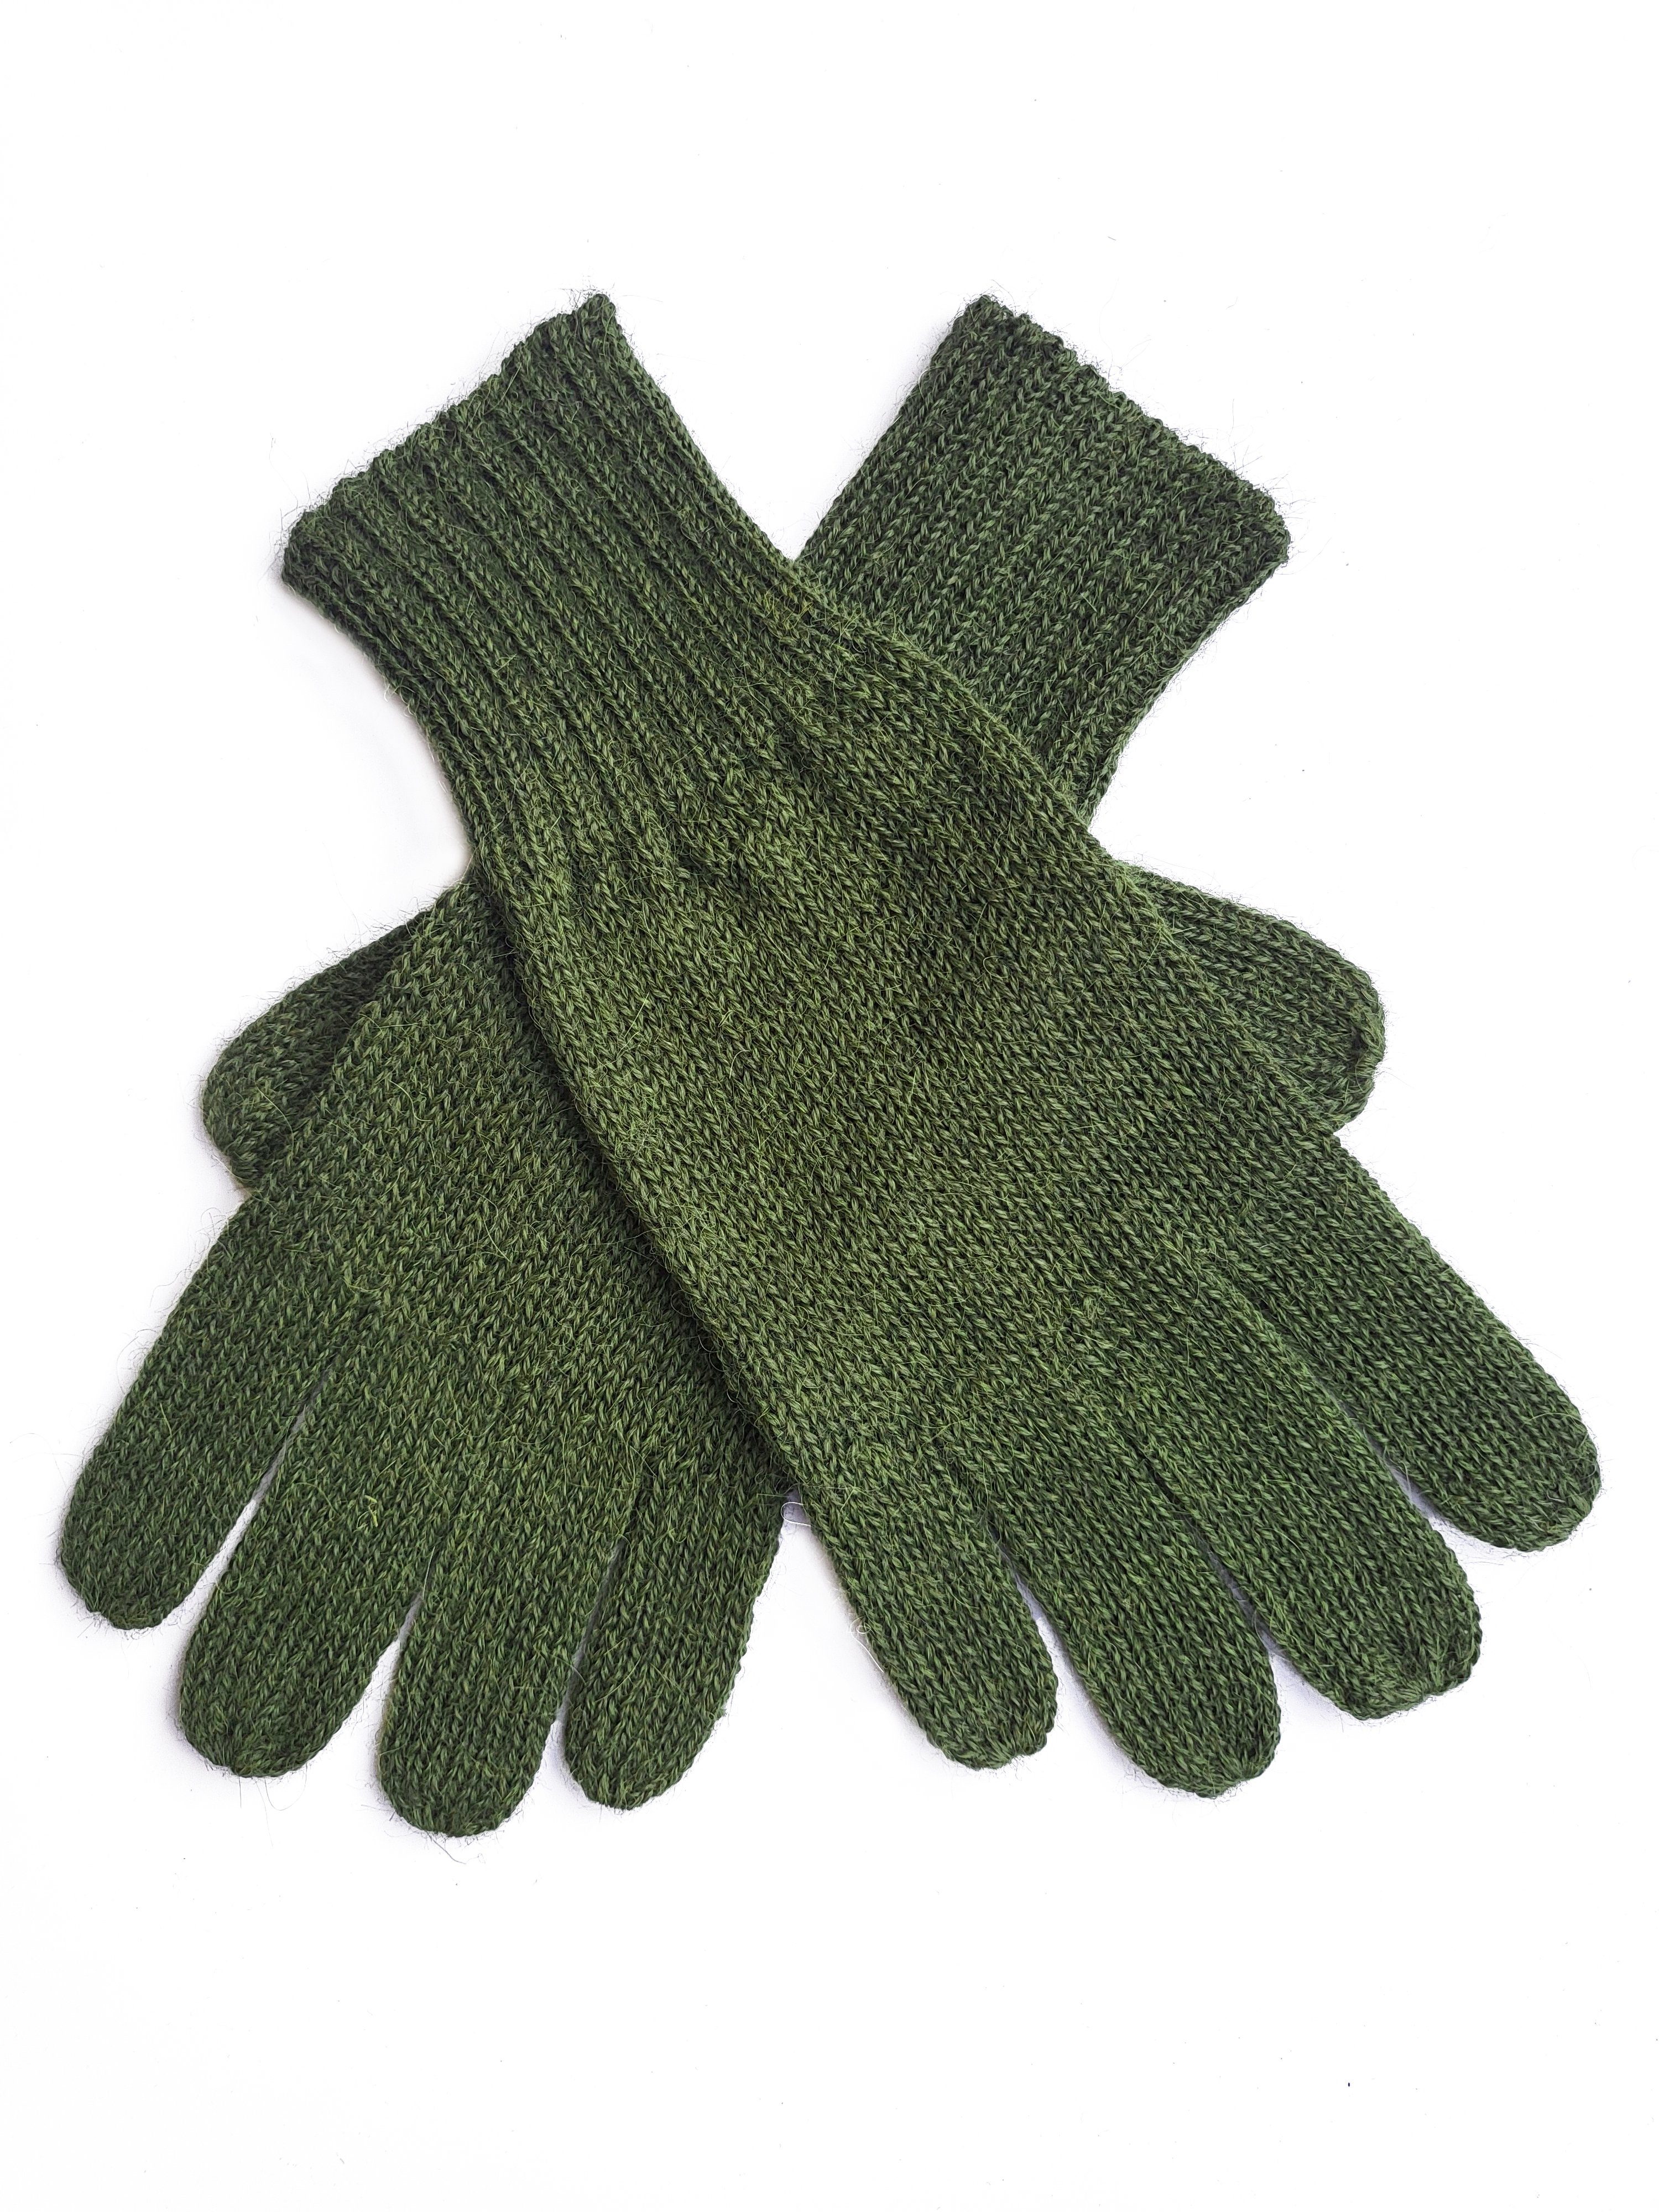 Posh Gear Strickhandschuhe Guantino Alpaka Fingerhandschuhe aus 100% Alpakawolle oliv grün